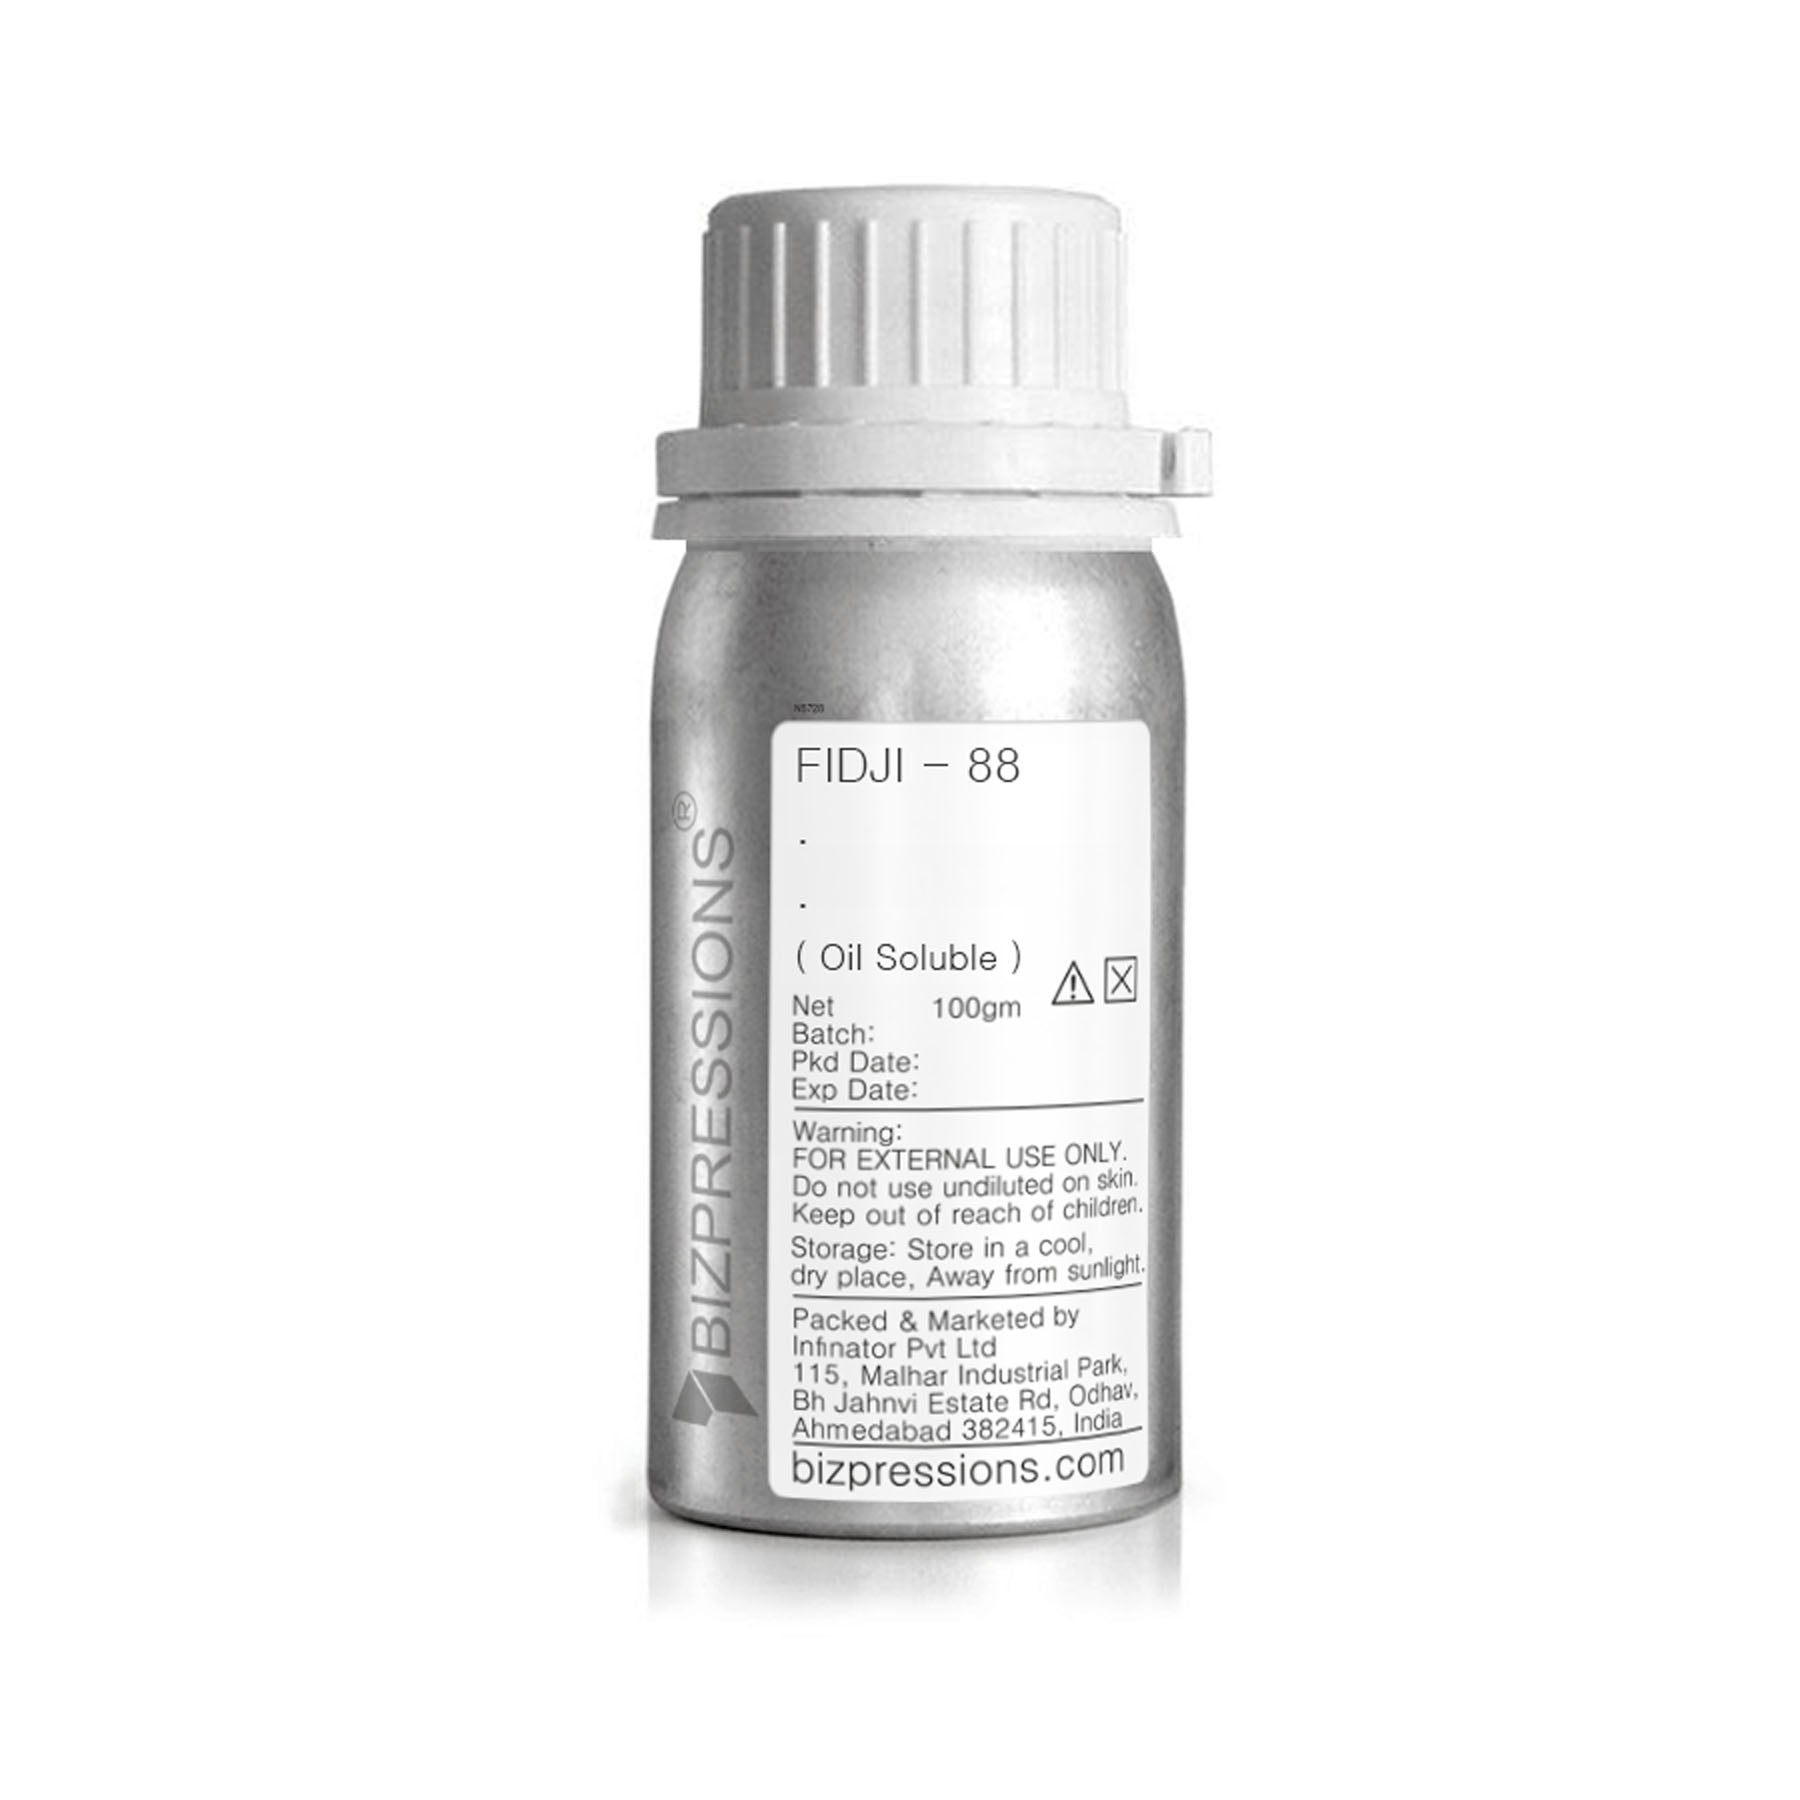 FIDJI - 88 - Fragrance ( Oil Soluble ) - 100 gm